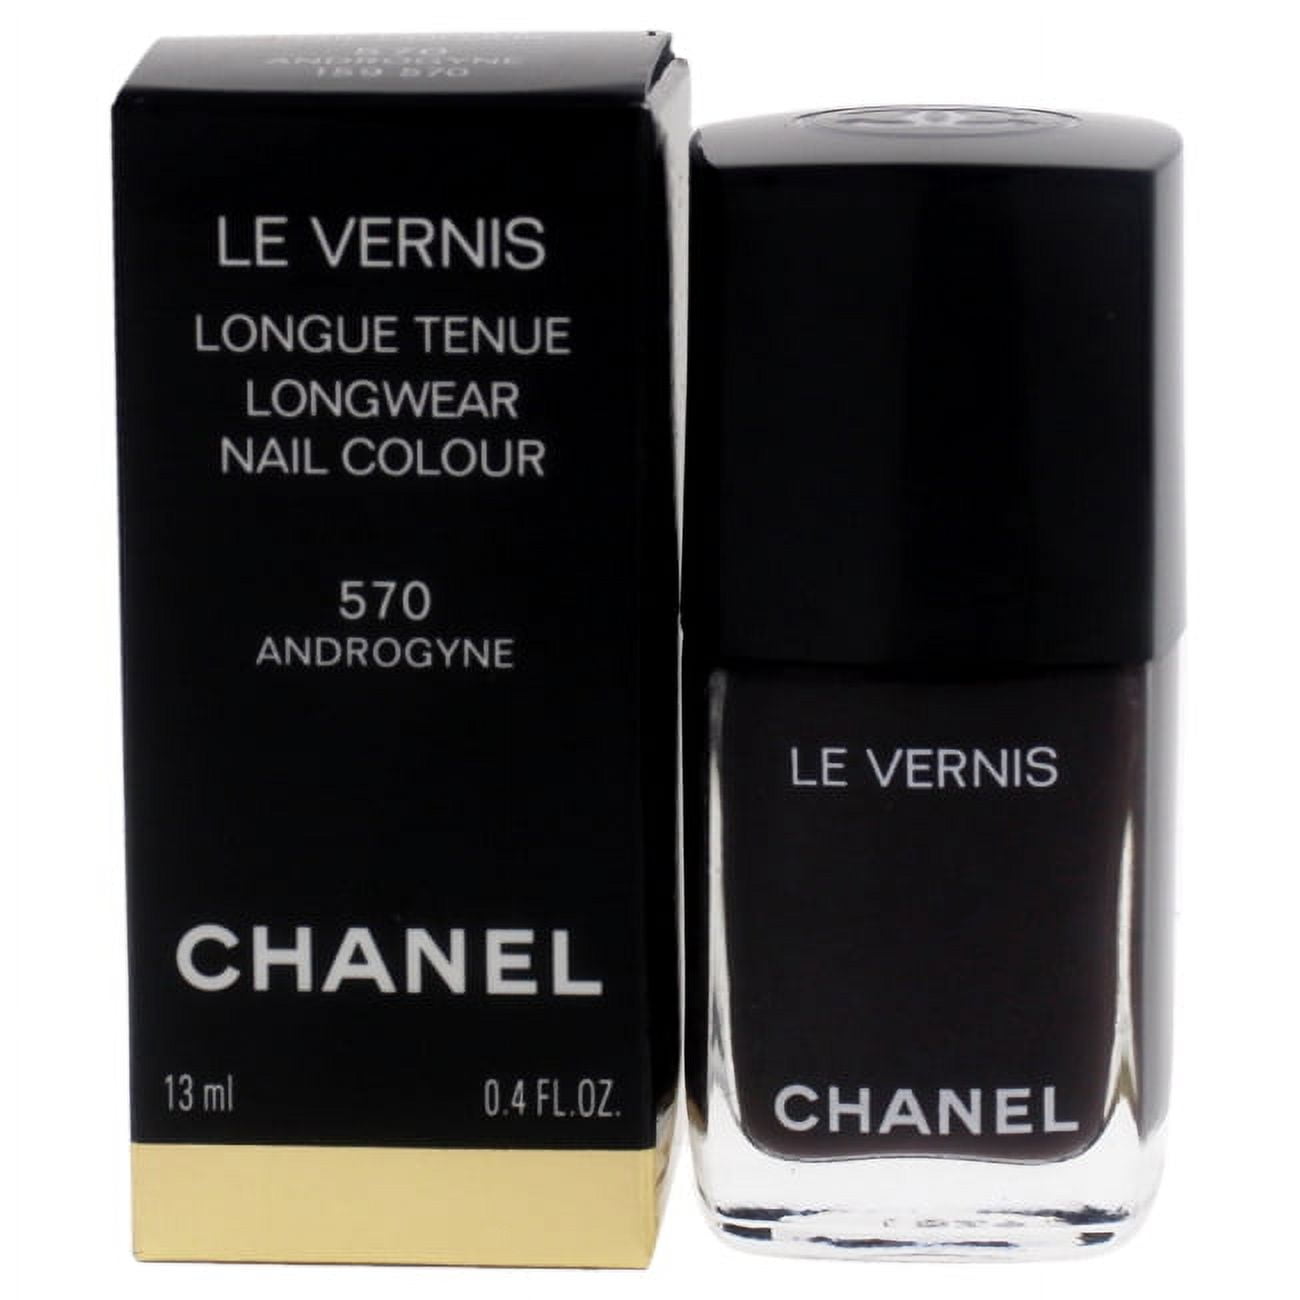 Le Vernis Longwear Nail Colour - 570 Androgyne by Chanel for Women - 0.4 oz Nail  Polish 